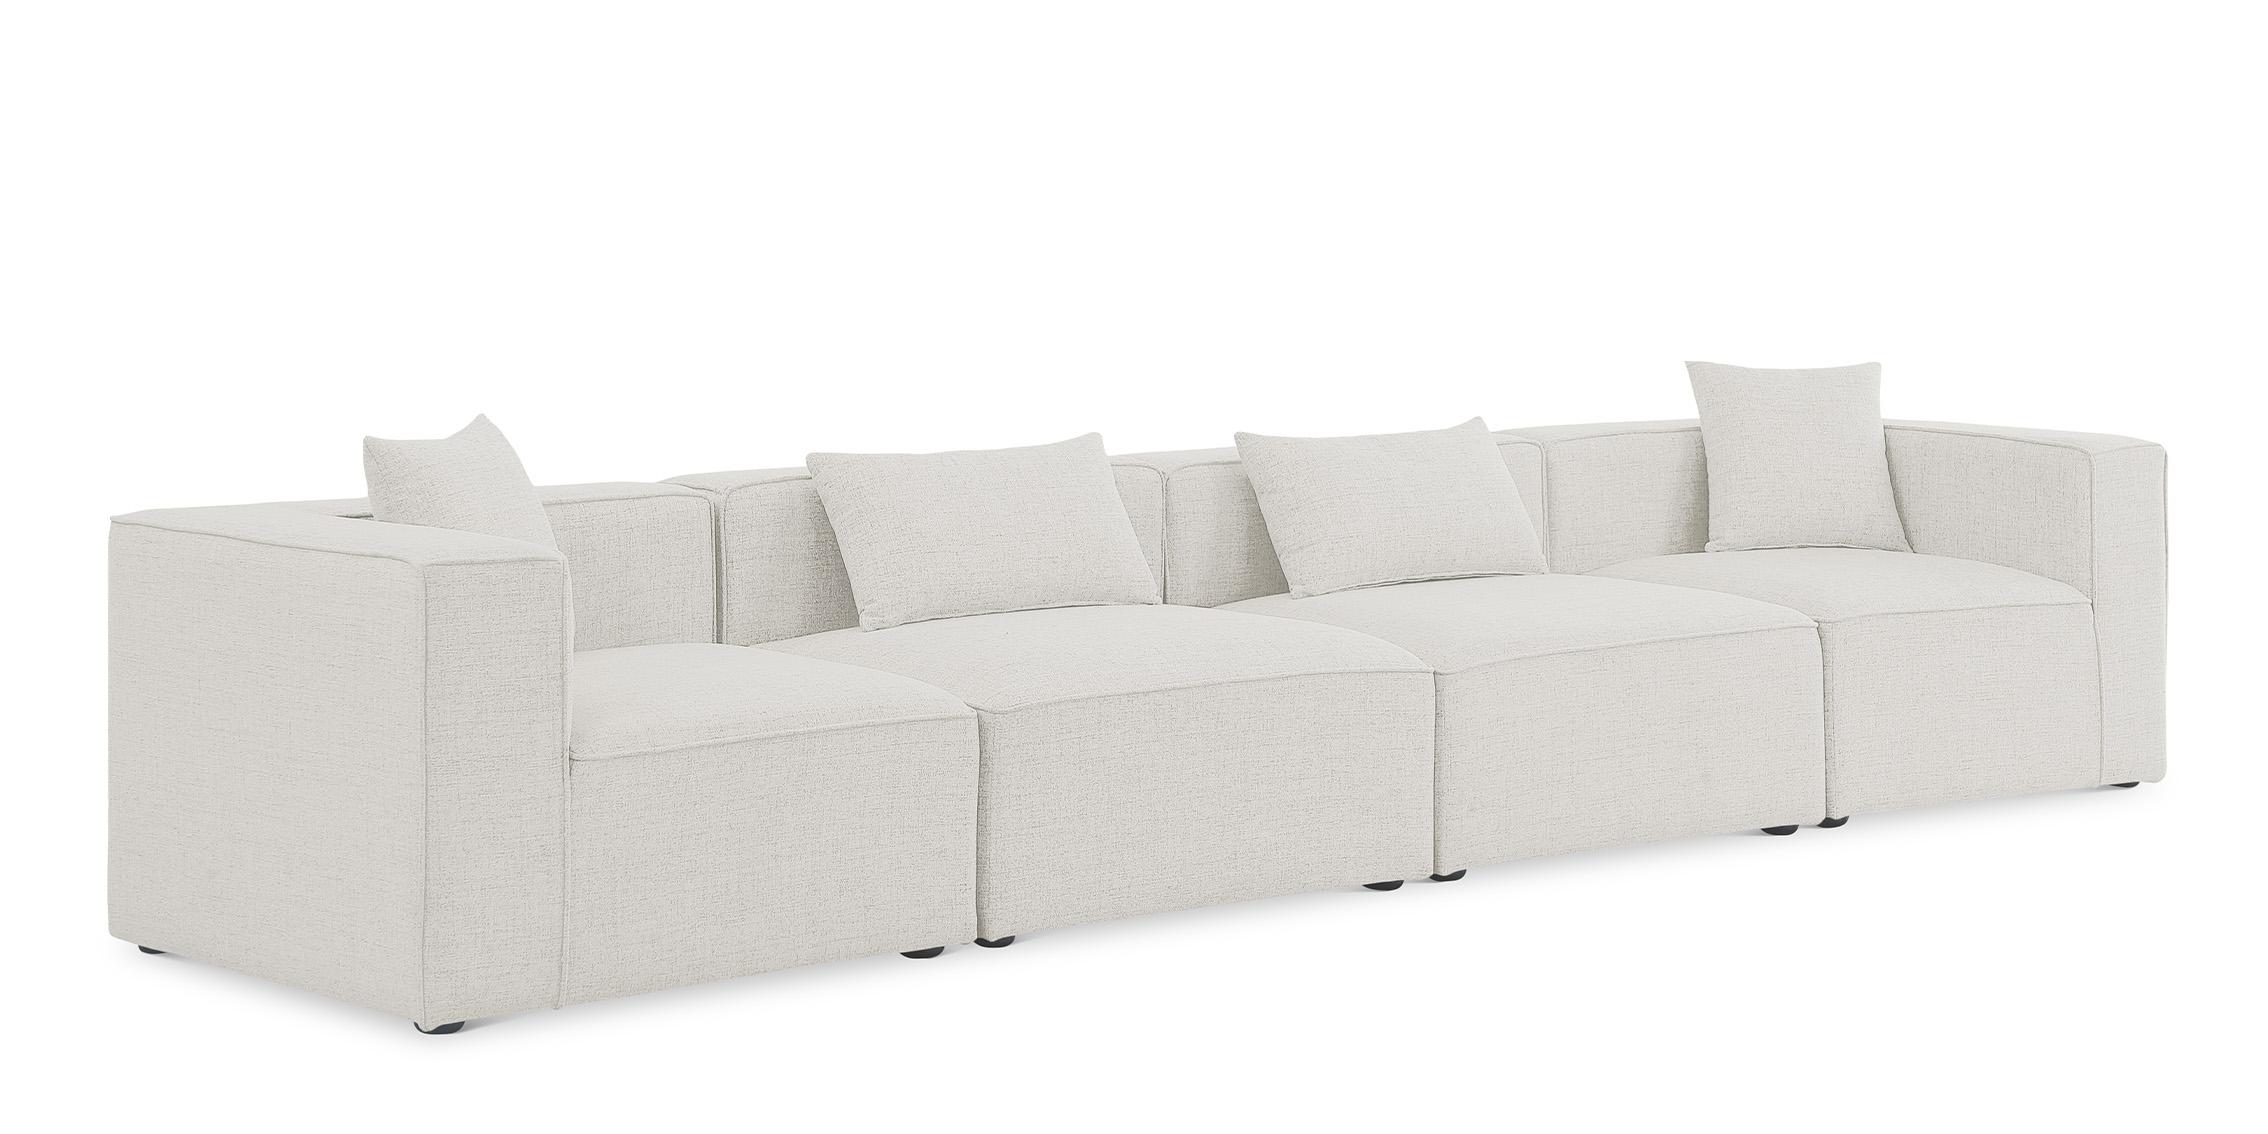 Contemporary, Modern Modular Sofa CUBE 630Cream-S144B 630Cream-S144B in Cream Linen